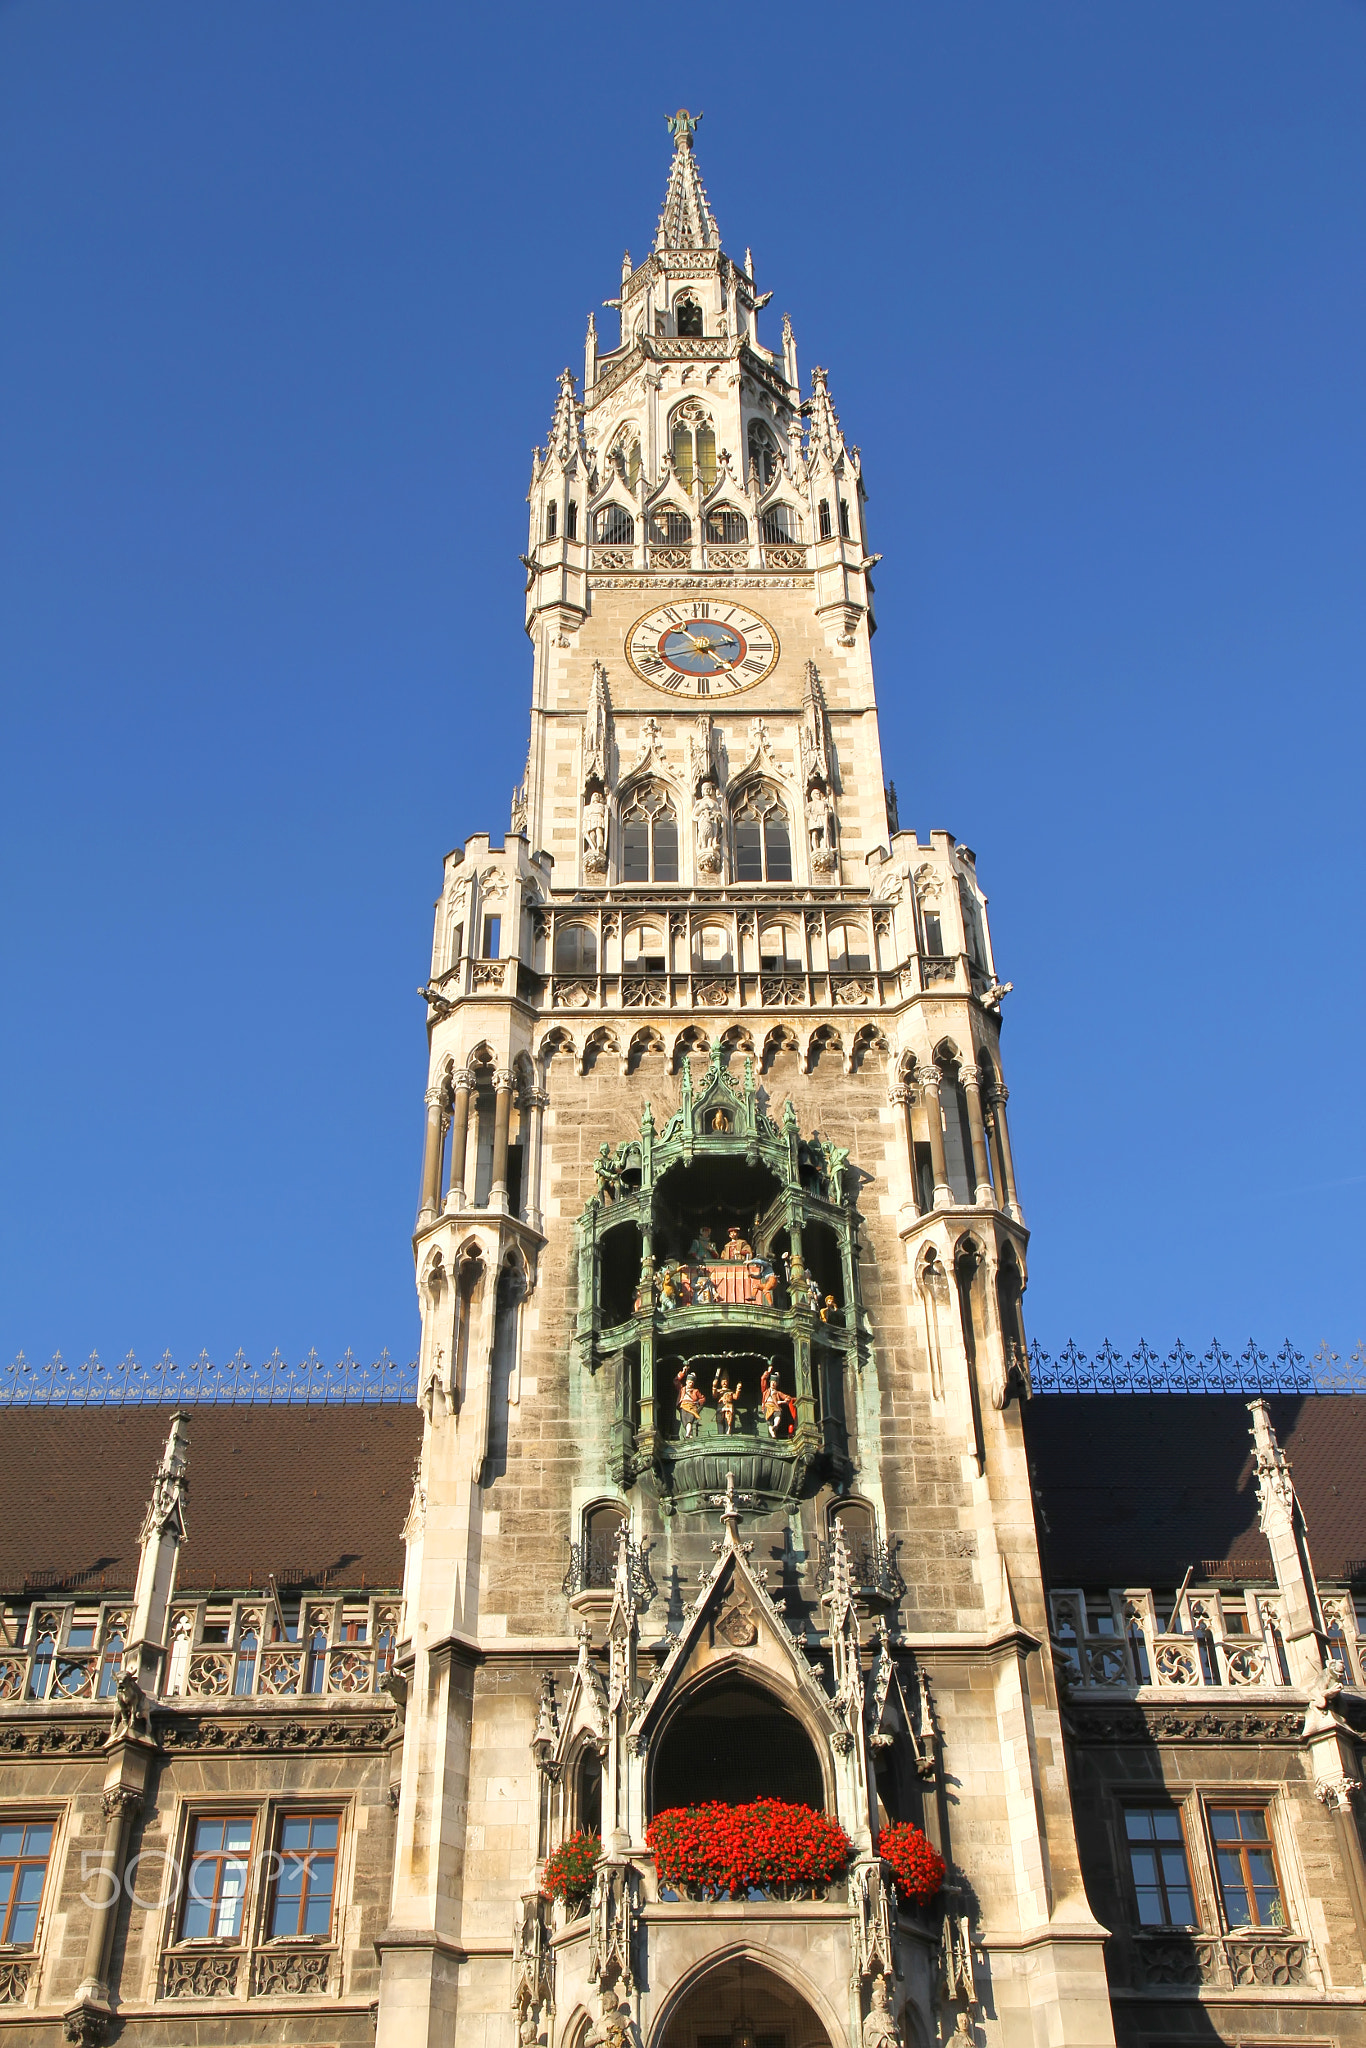 The Rathaus of Munich